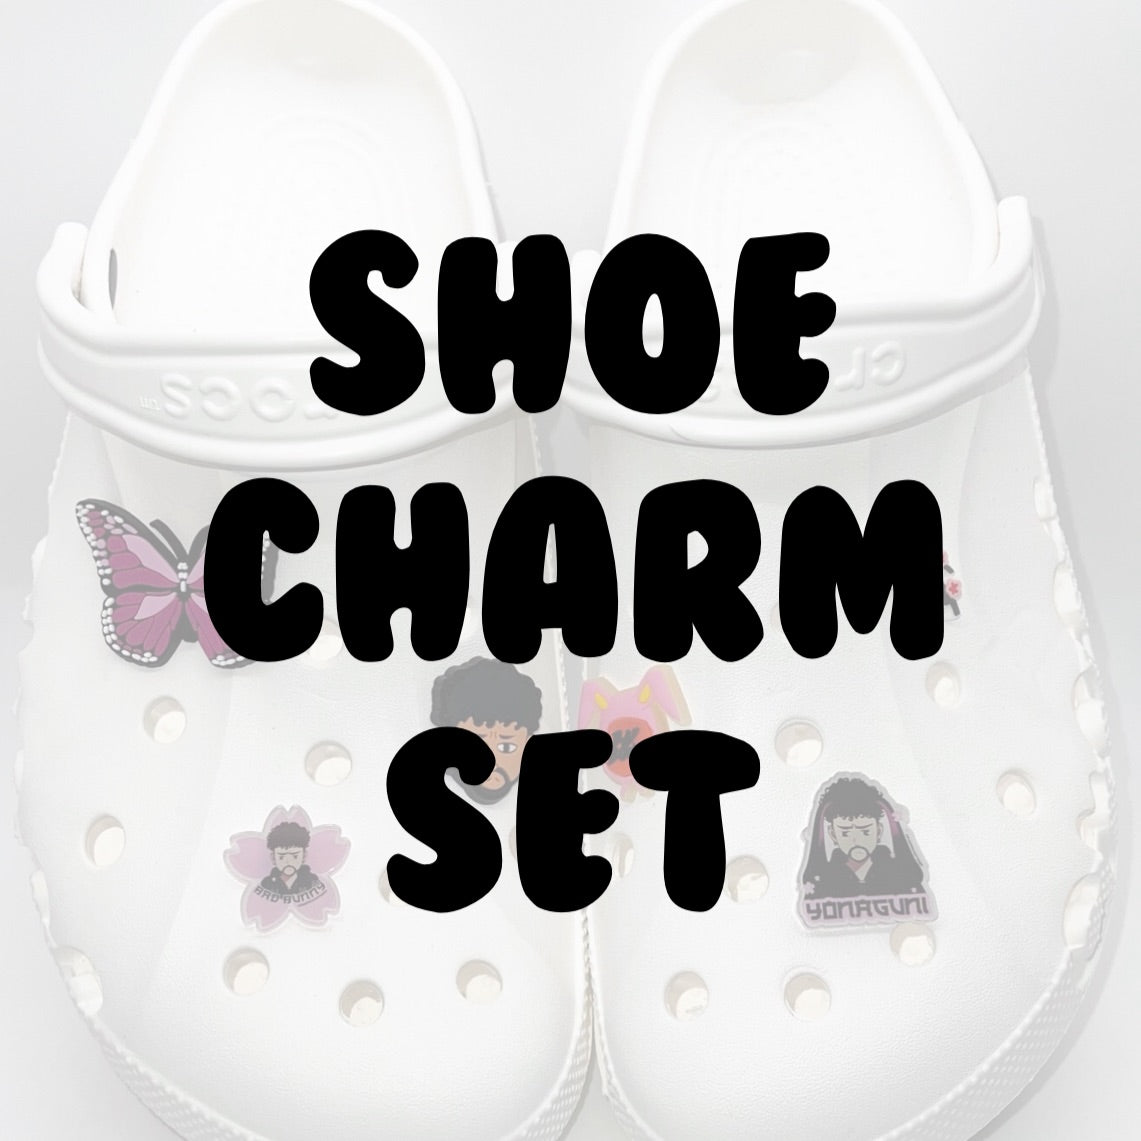 Shoe charm set